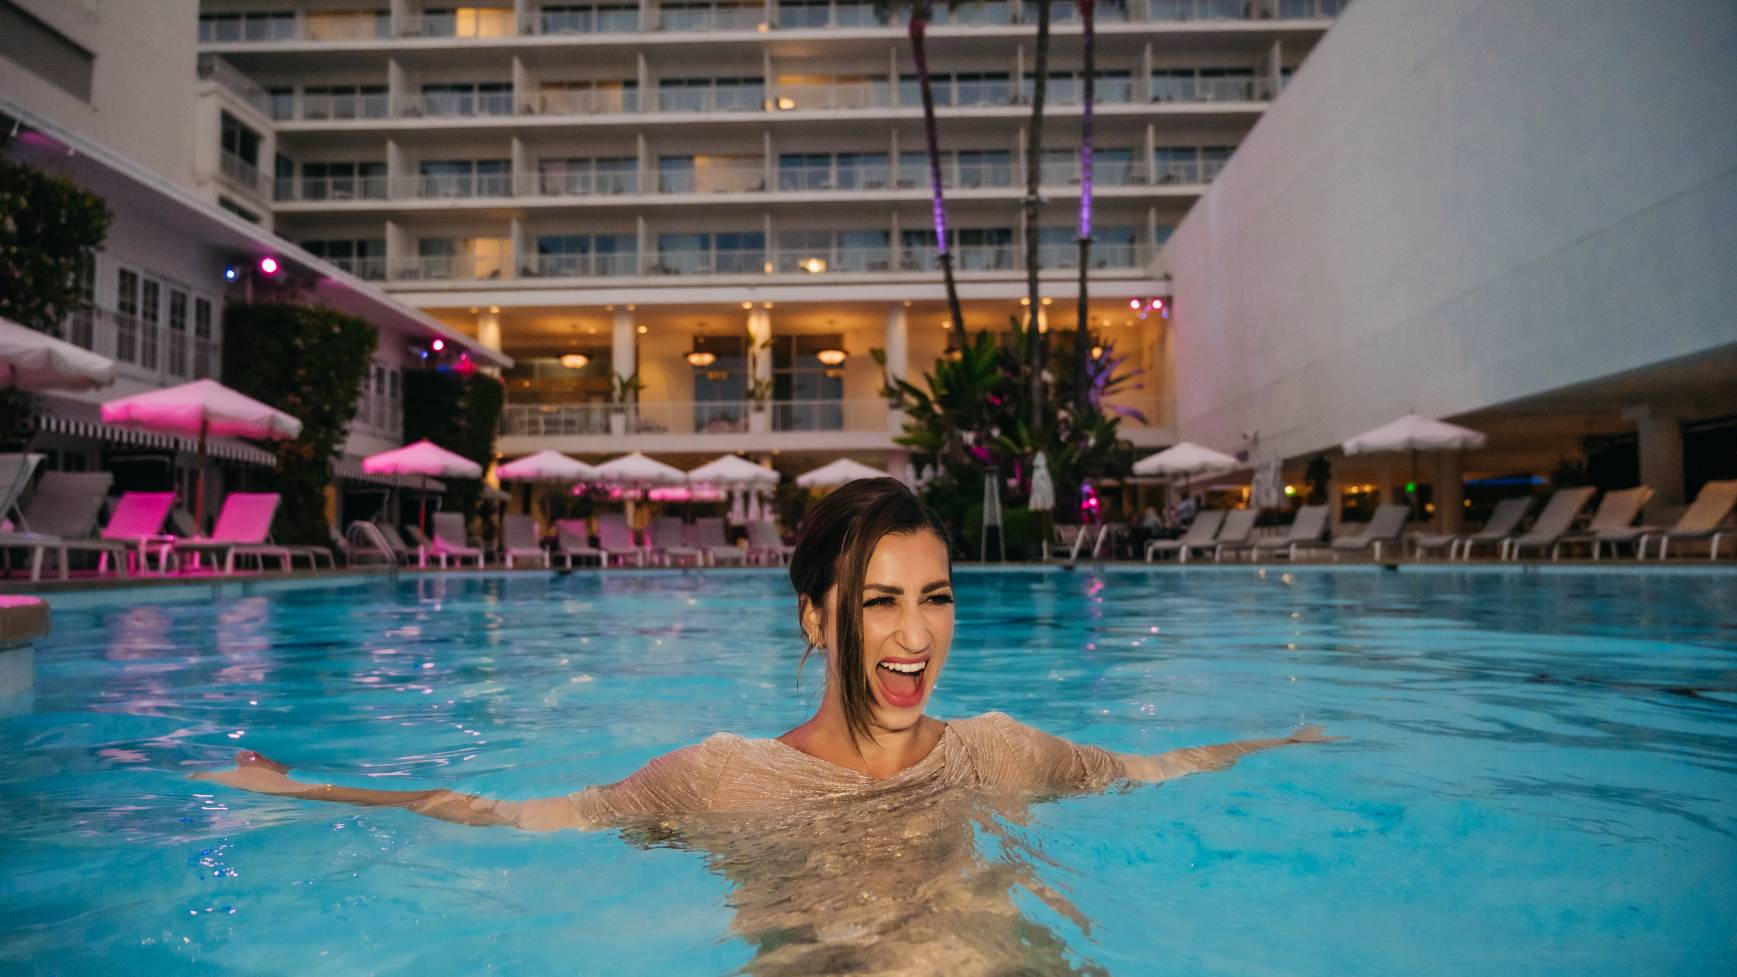 Woman laughing in pool